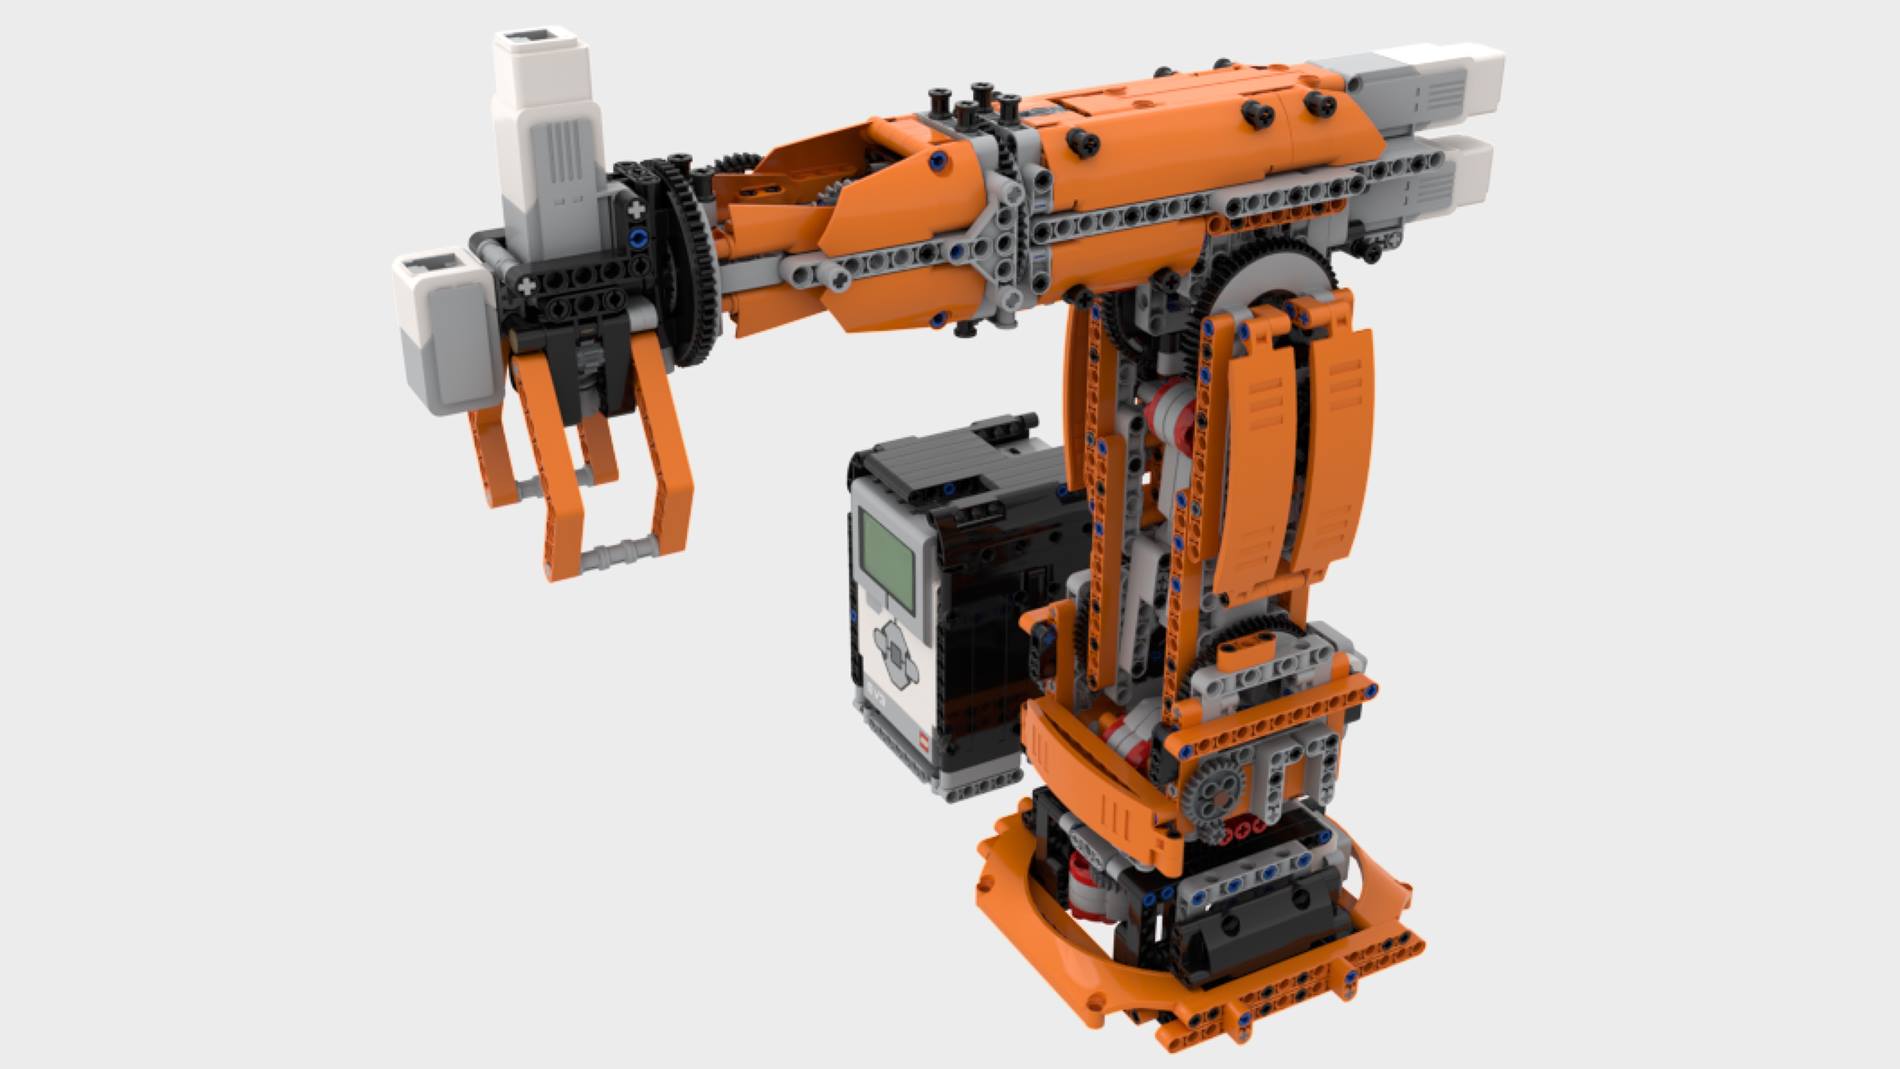 Meddele diagonal Ejendommelige Learning how to program easily using a building block robot | KUKA AG